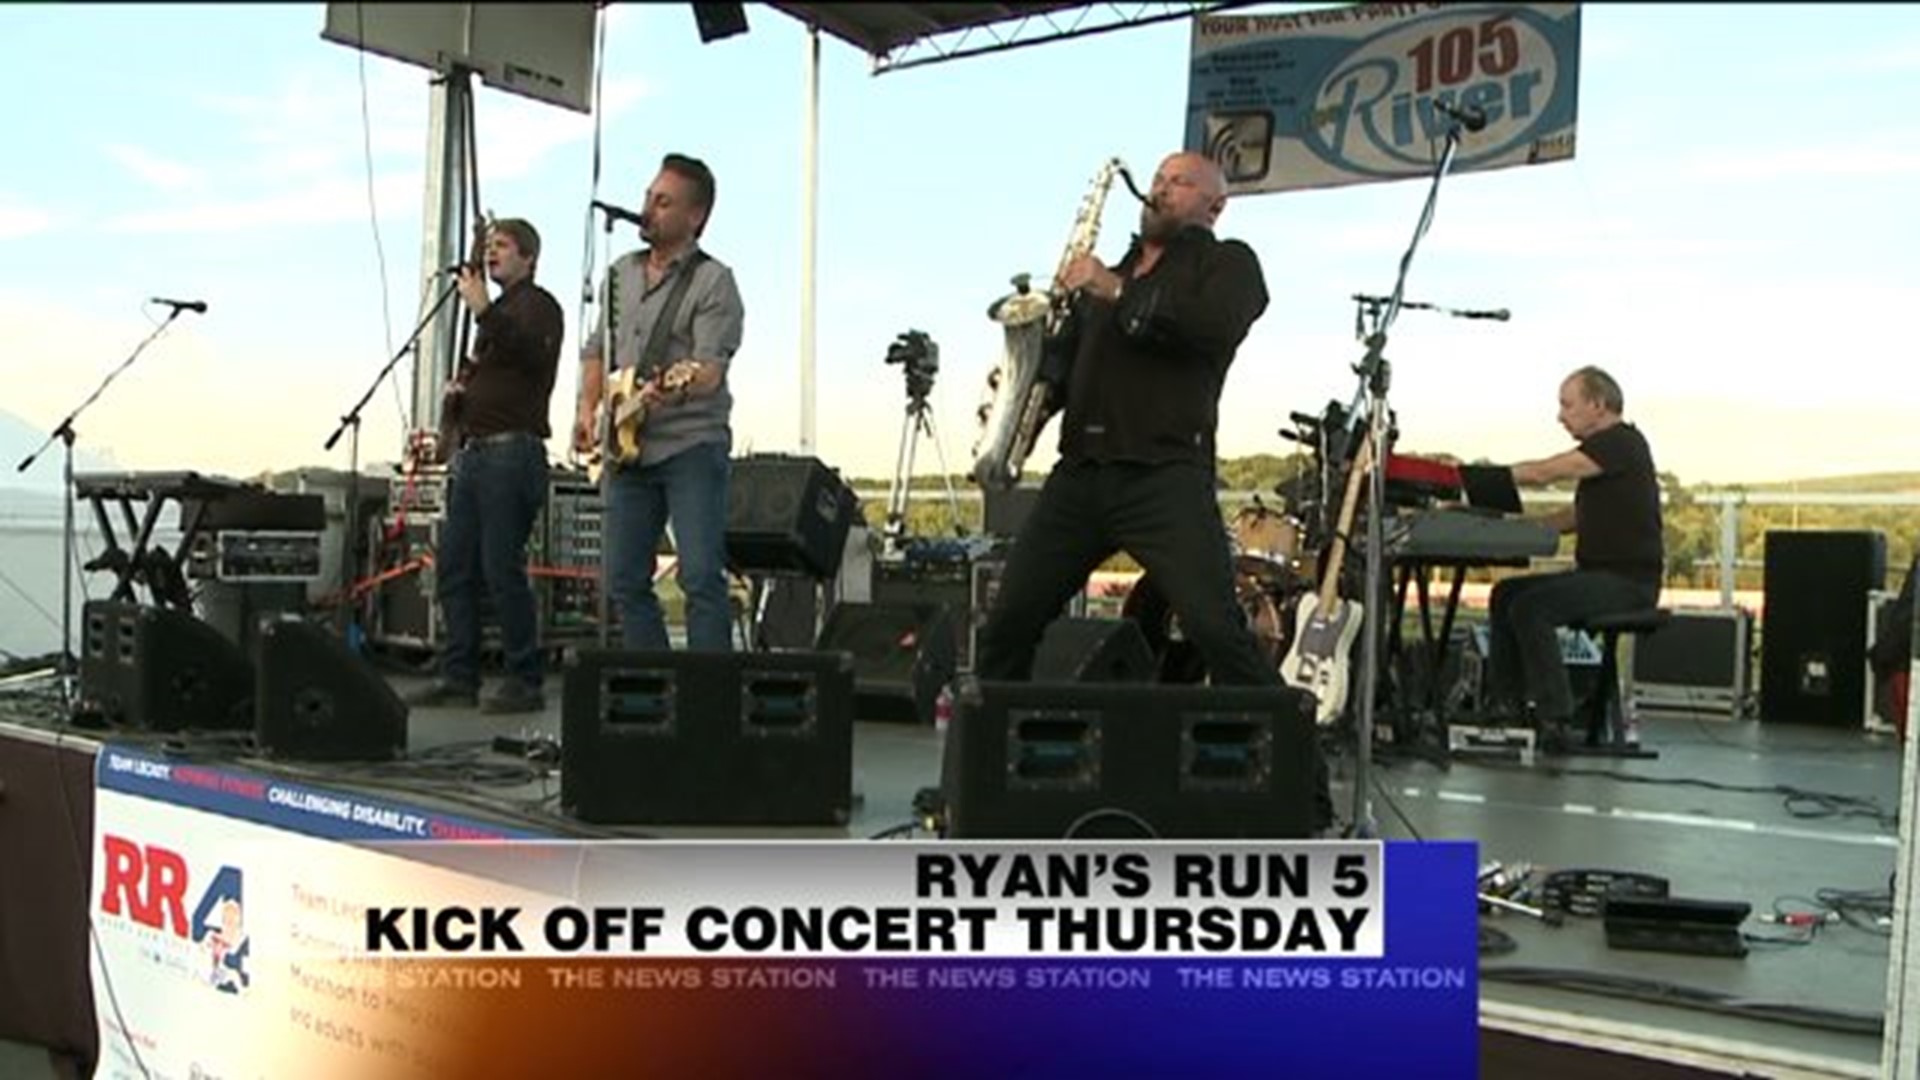 Ryan's Run V Kicks Off with Free Concert